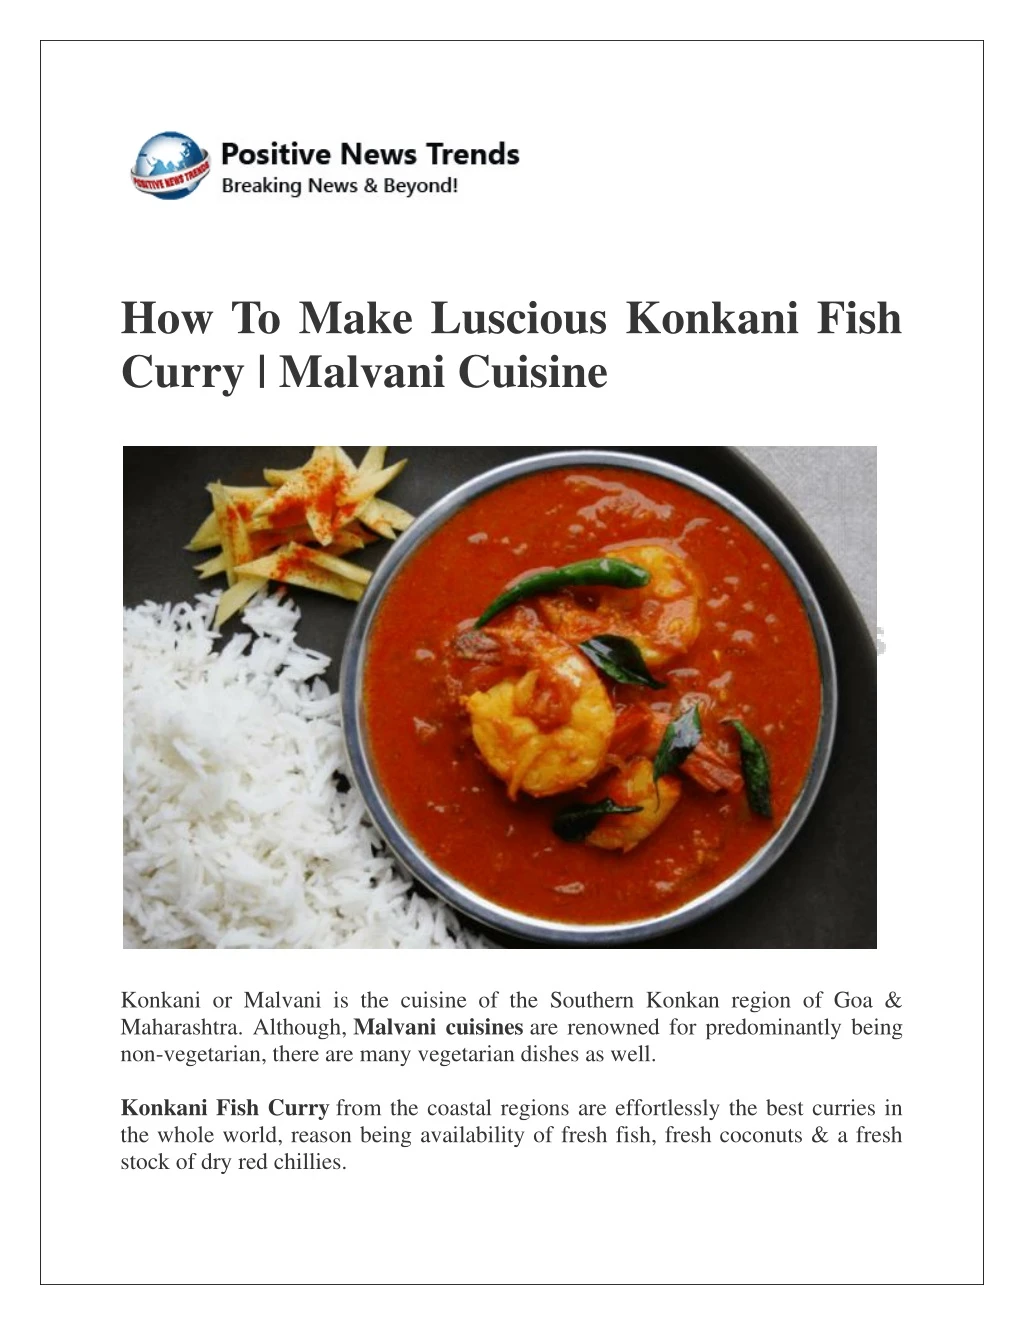 how to make luscious konkani fish curry malvani